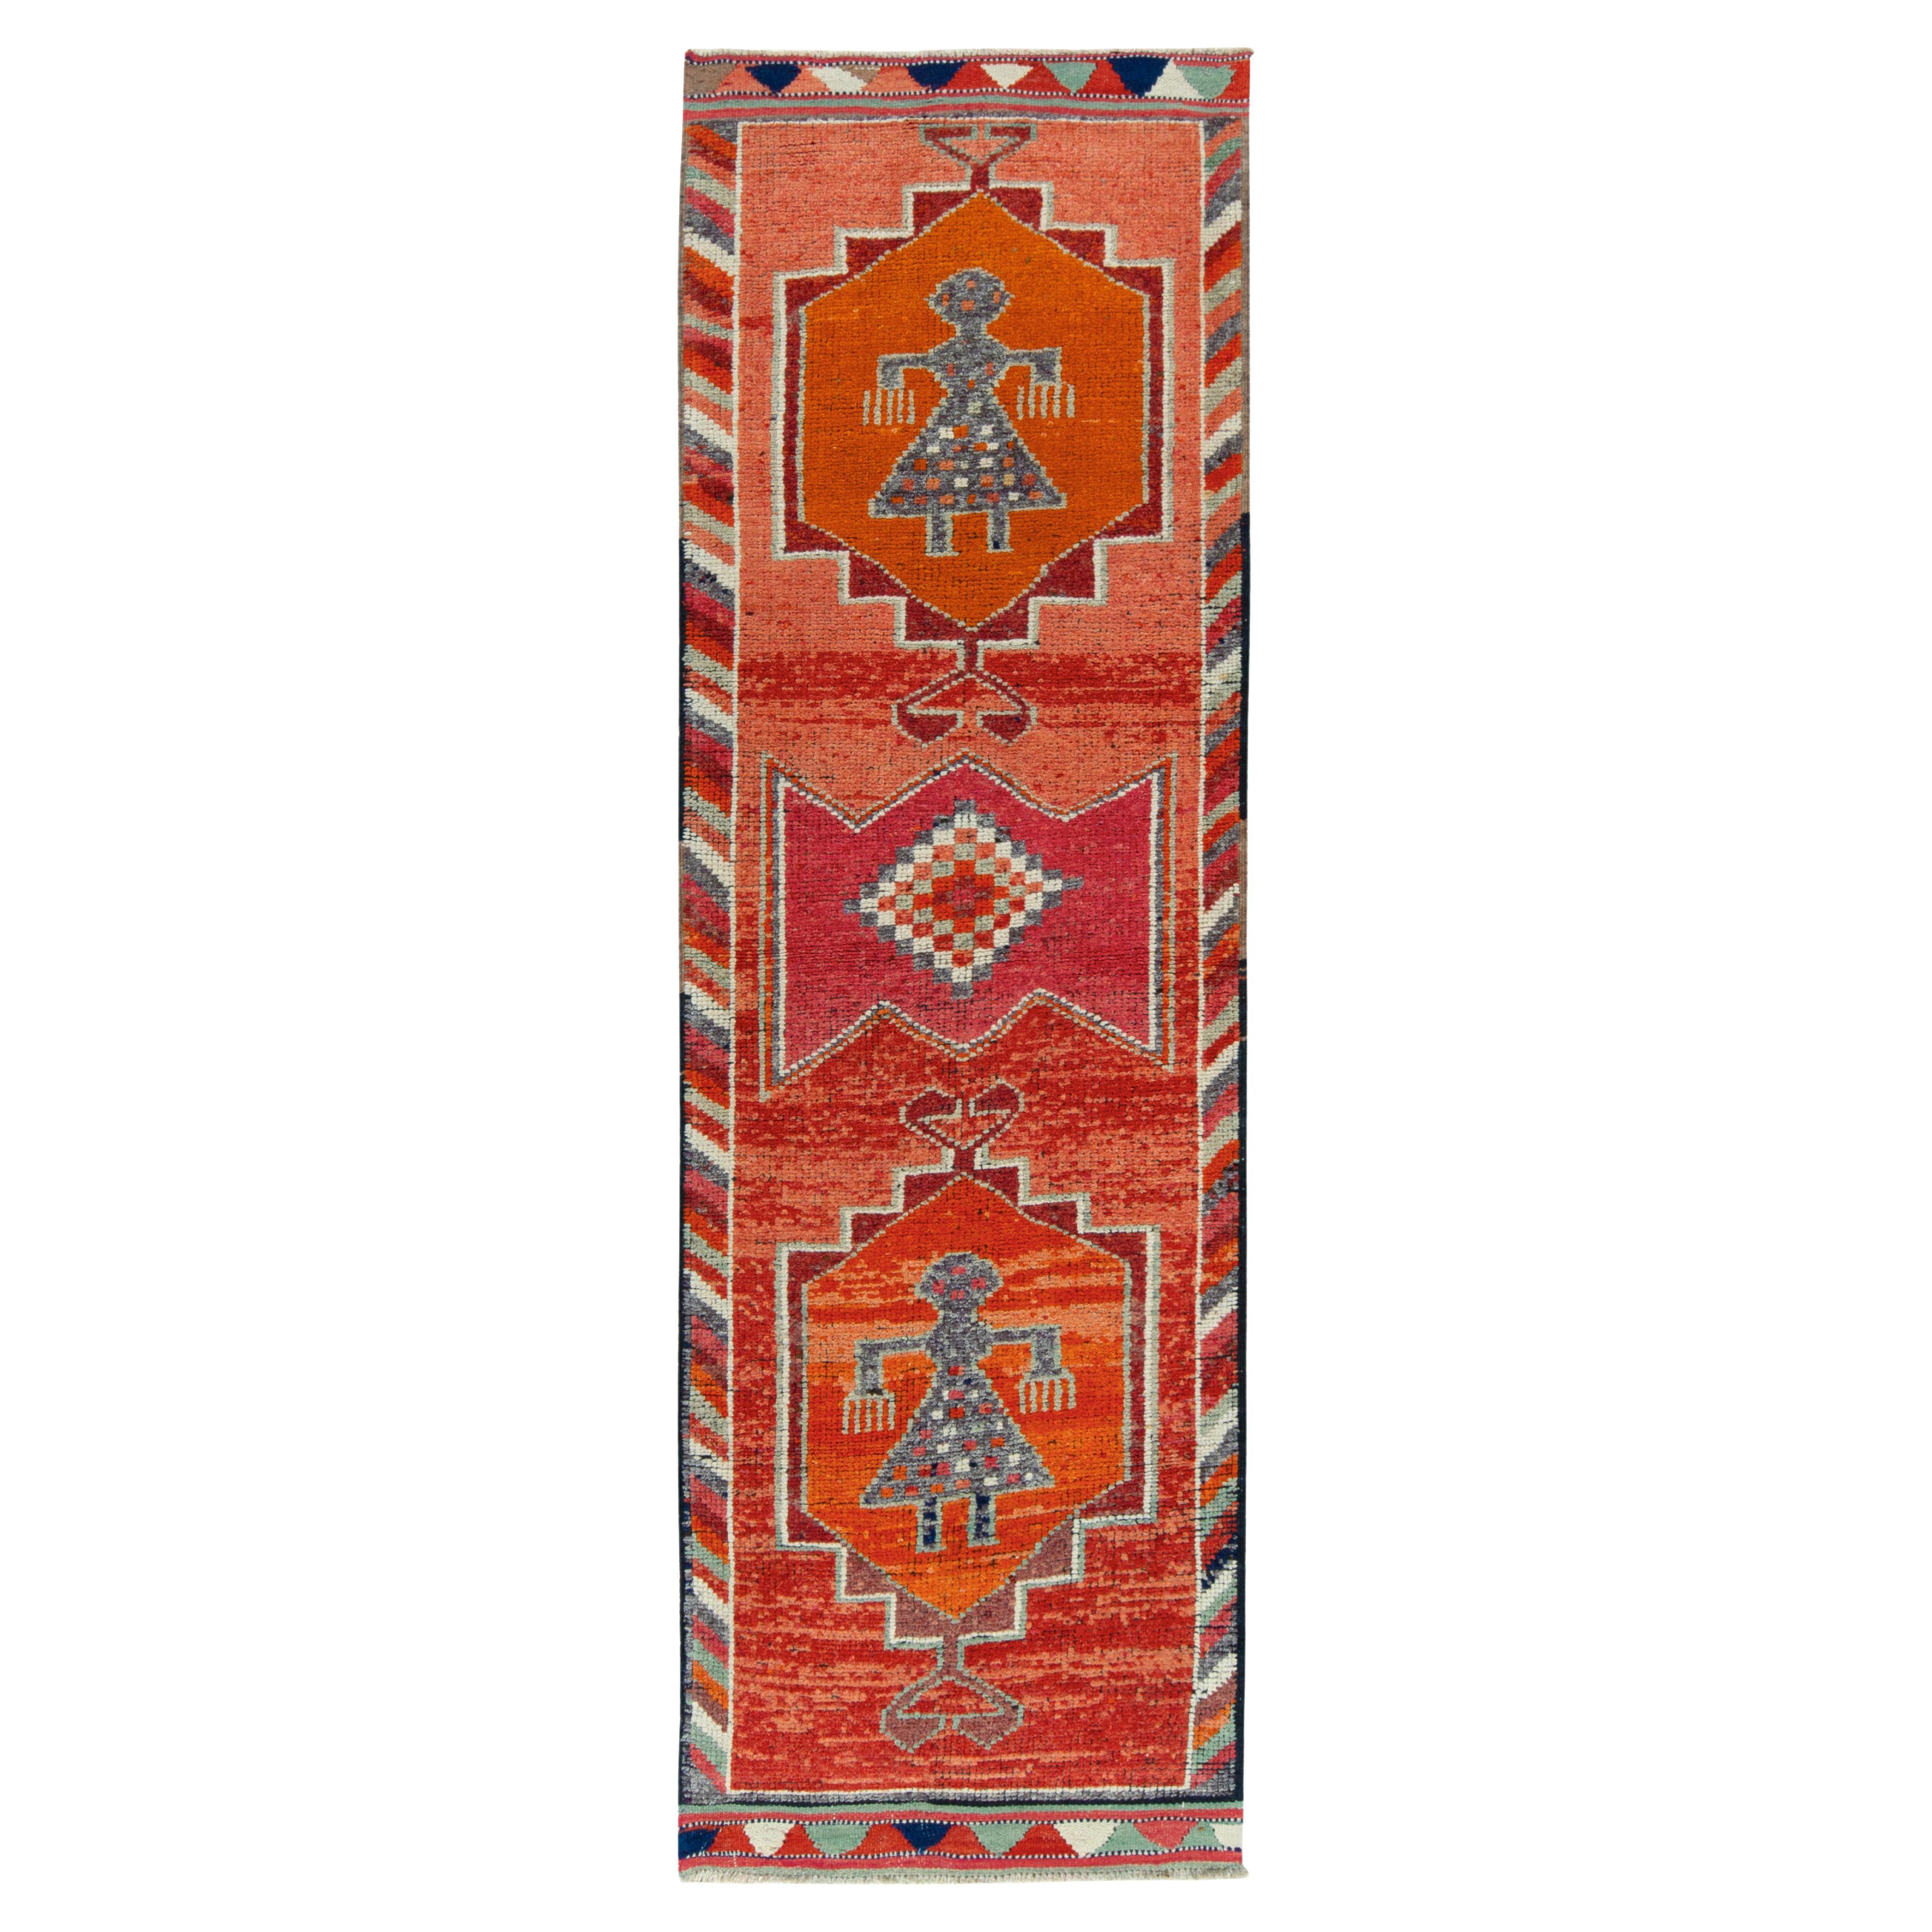 1950s Vintage Tribal Rug in Red, Orange, and Geometric Pattern by Rug & Kilim For Sale